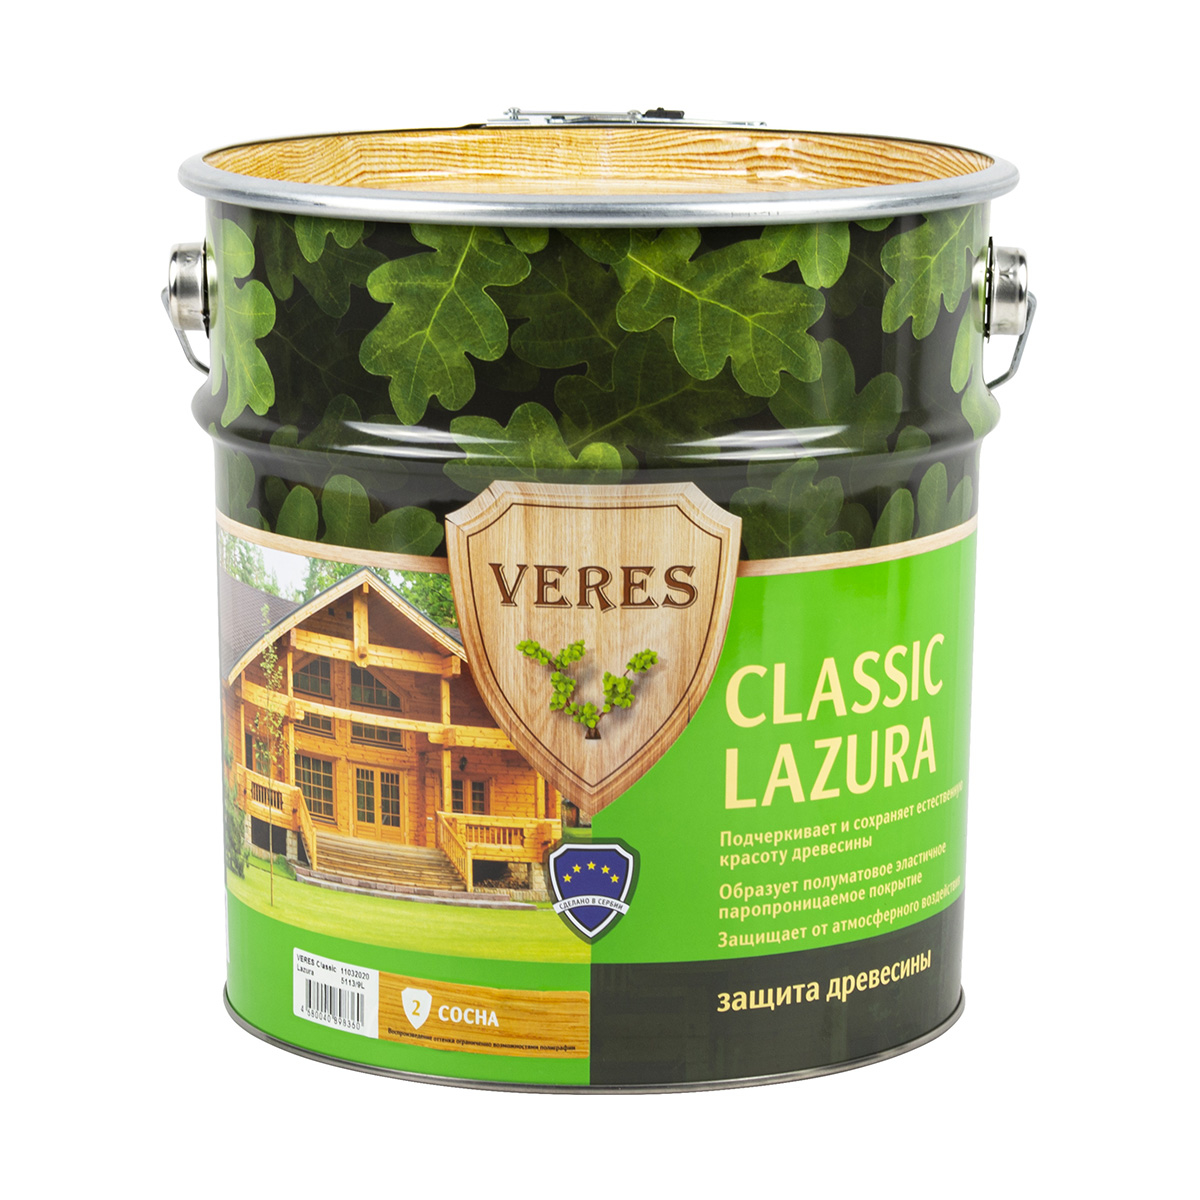 Пропитка Veres classic lazura № 2 сосна 9 л